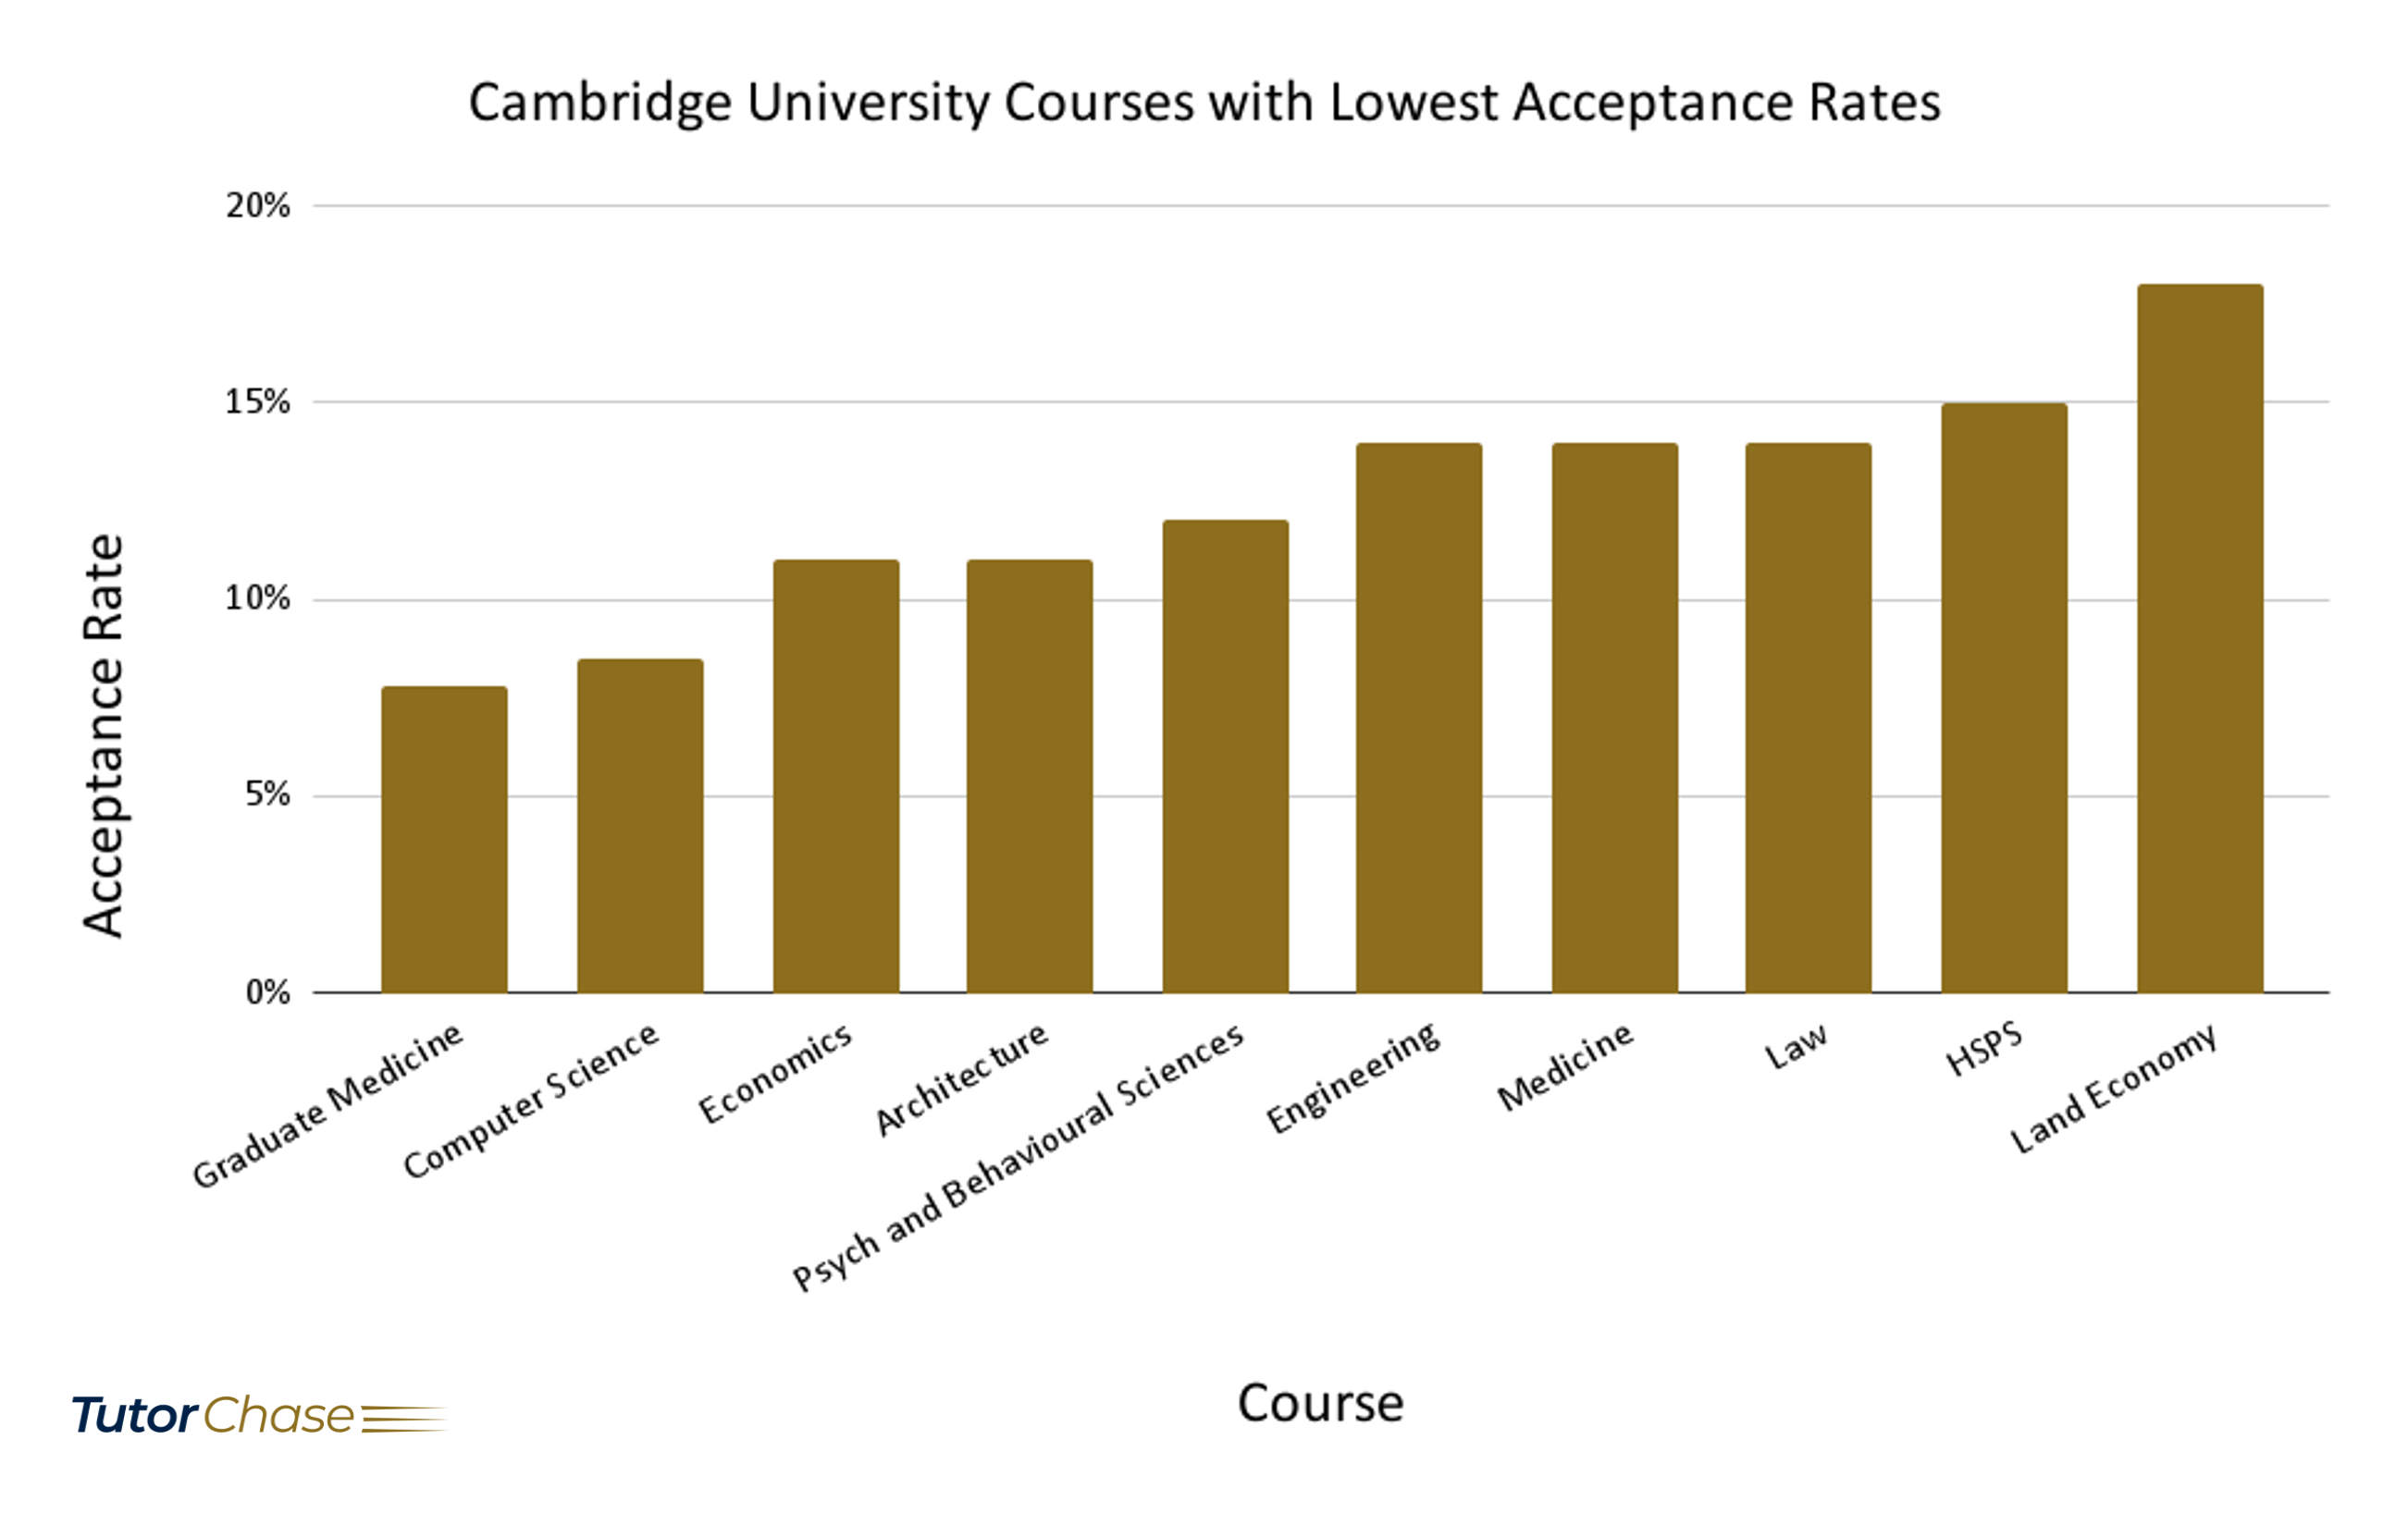 Cambridge University Courses with the Lowest Acceptance Rates